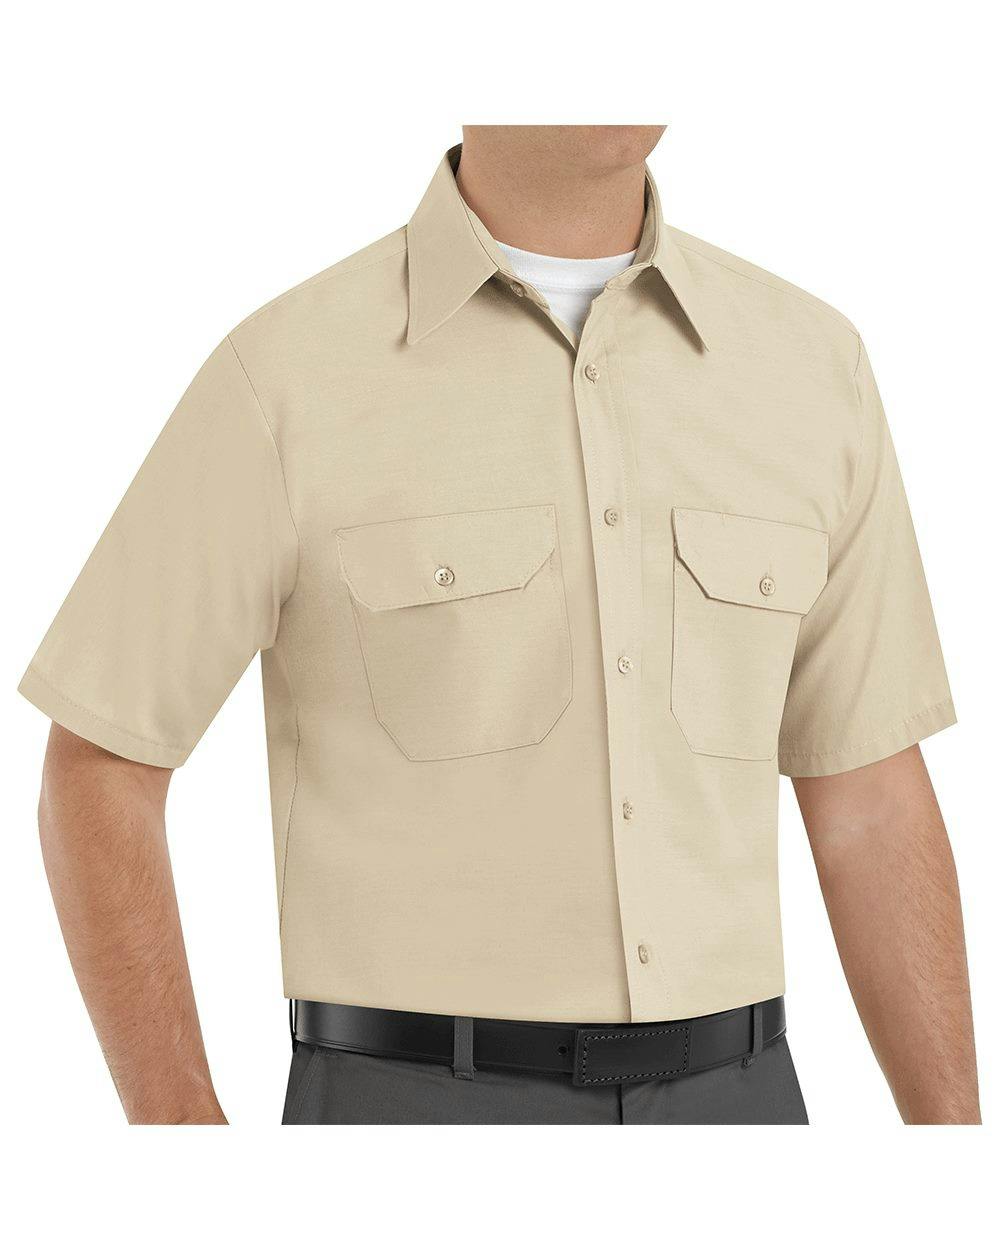 Image for Dress Uniform Short Sleeve Shirt - SP60